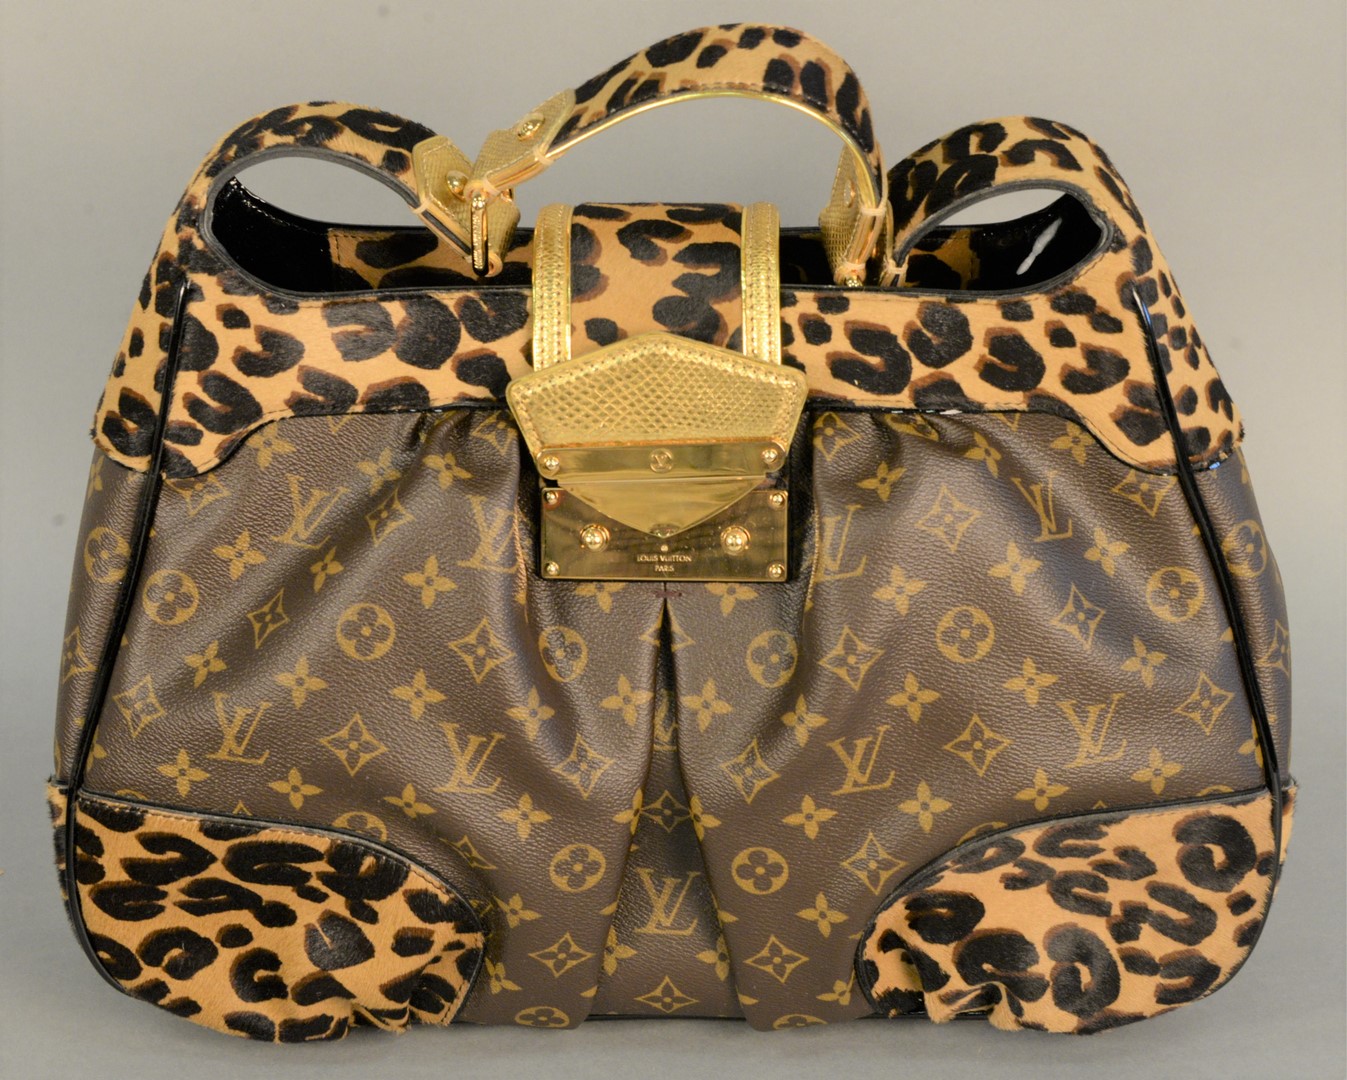 Lot 52: Louis Vuitton leopard print monogram handbag, 'Polly Leo' having  original box, dust bag, tags and receipt, new price 3,940. - Nadeau's  Auction Gallery